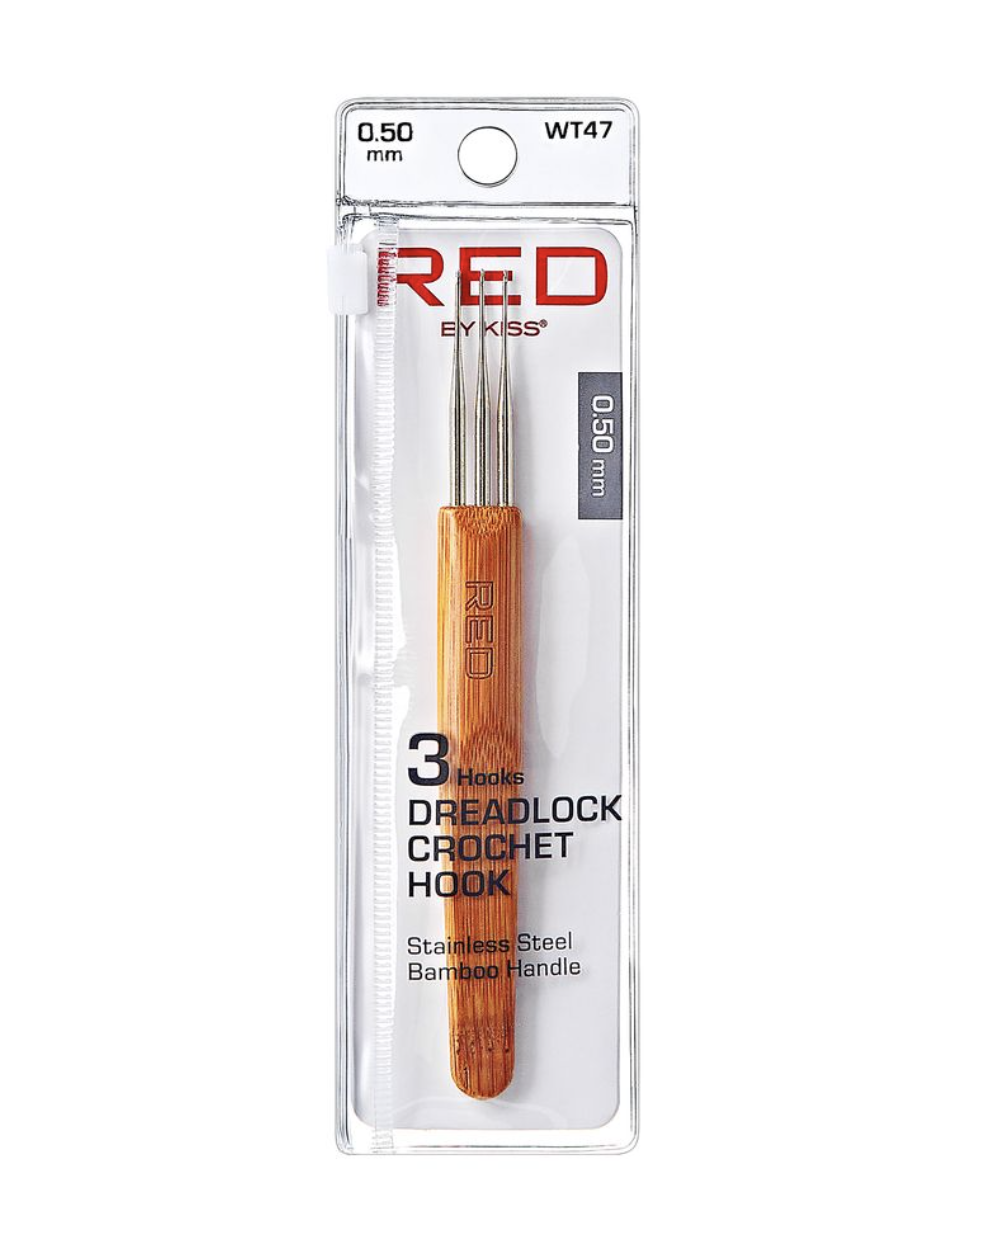 Red by Kiss Dreadlock Crochet Hook 0.50mm - BPolished Beauty Supply